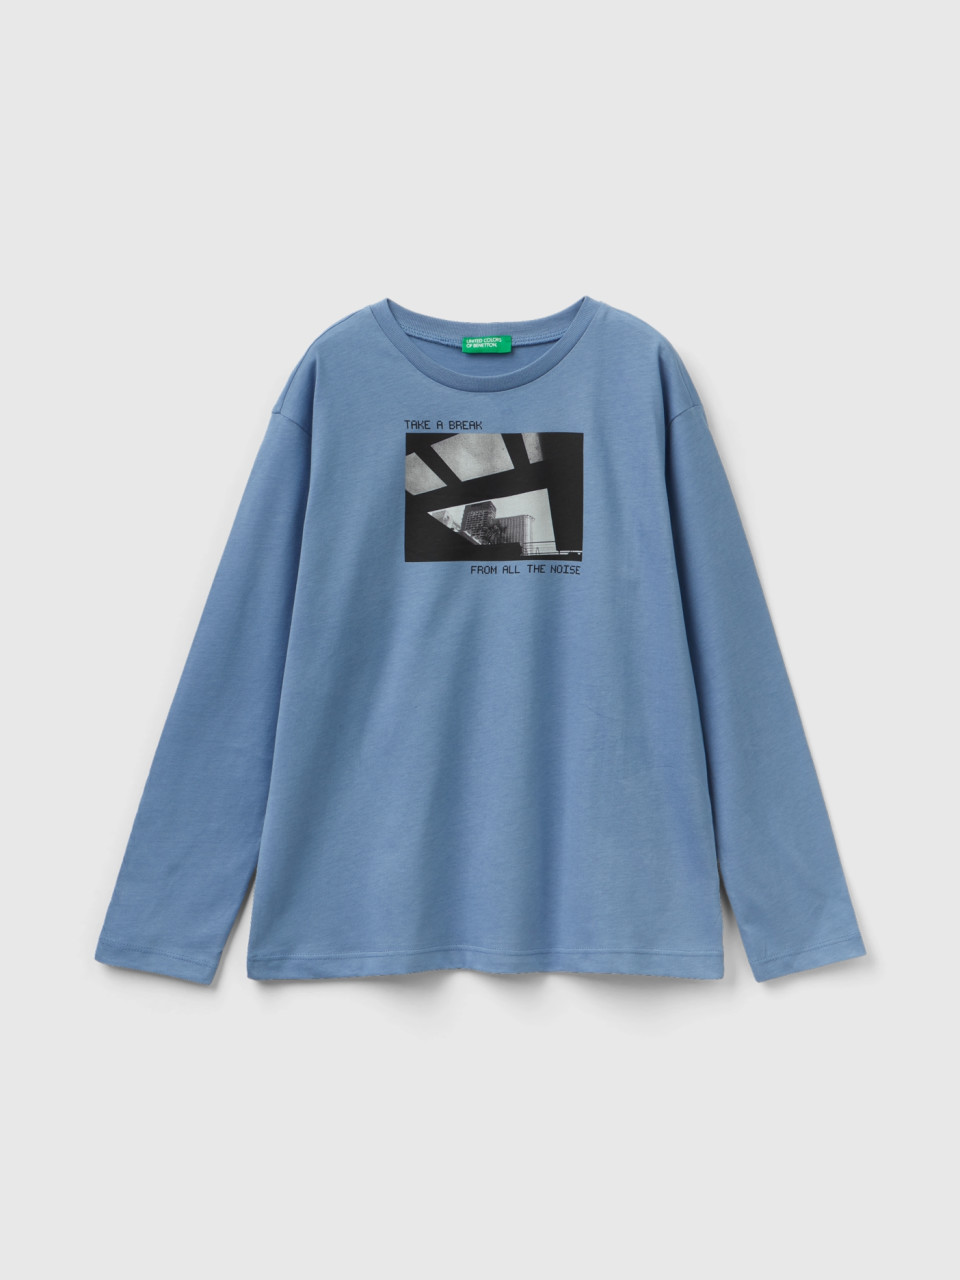 Benetton, Warm T-shirt With Photo Print, Light Blue, Kids